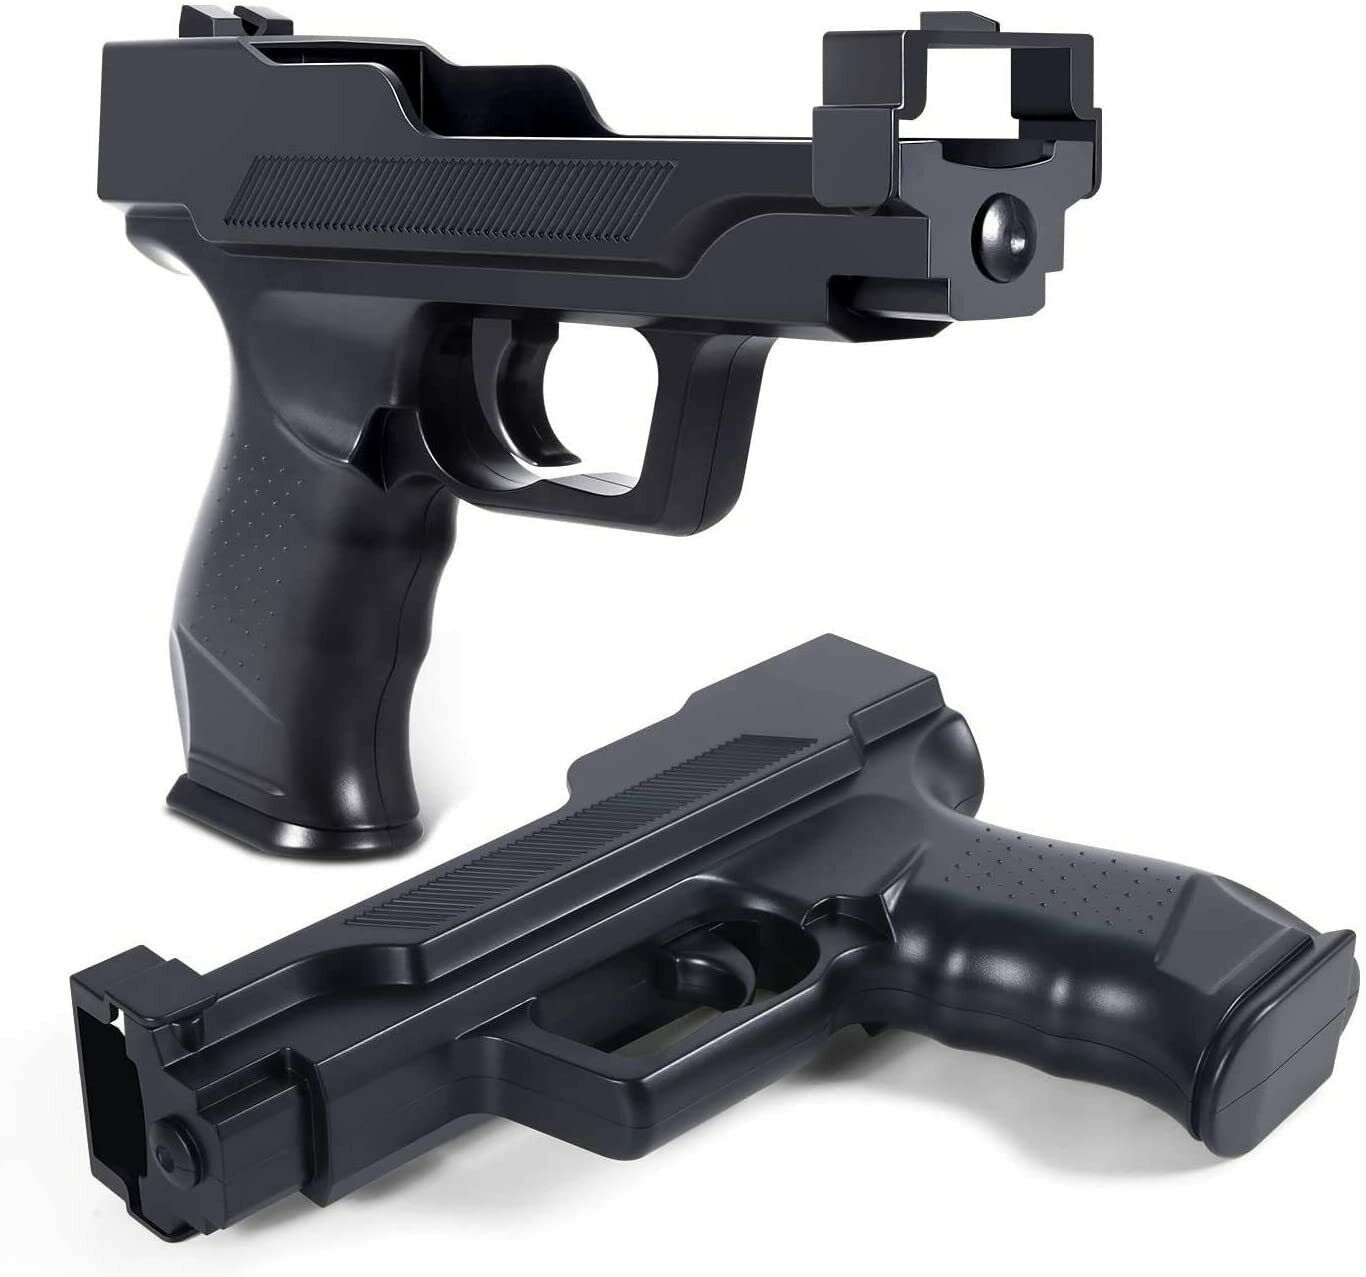 Wii Motion Plus Gun for Nintendo Wii Remote Controller wii zapper gun 2 pack Plat